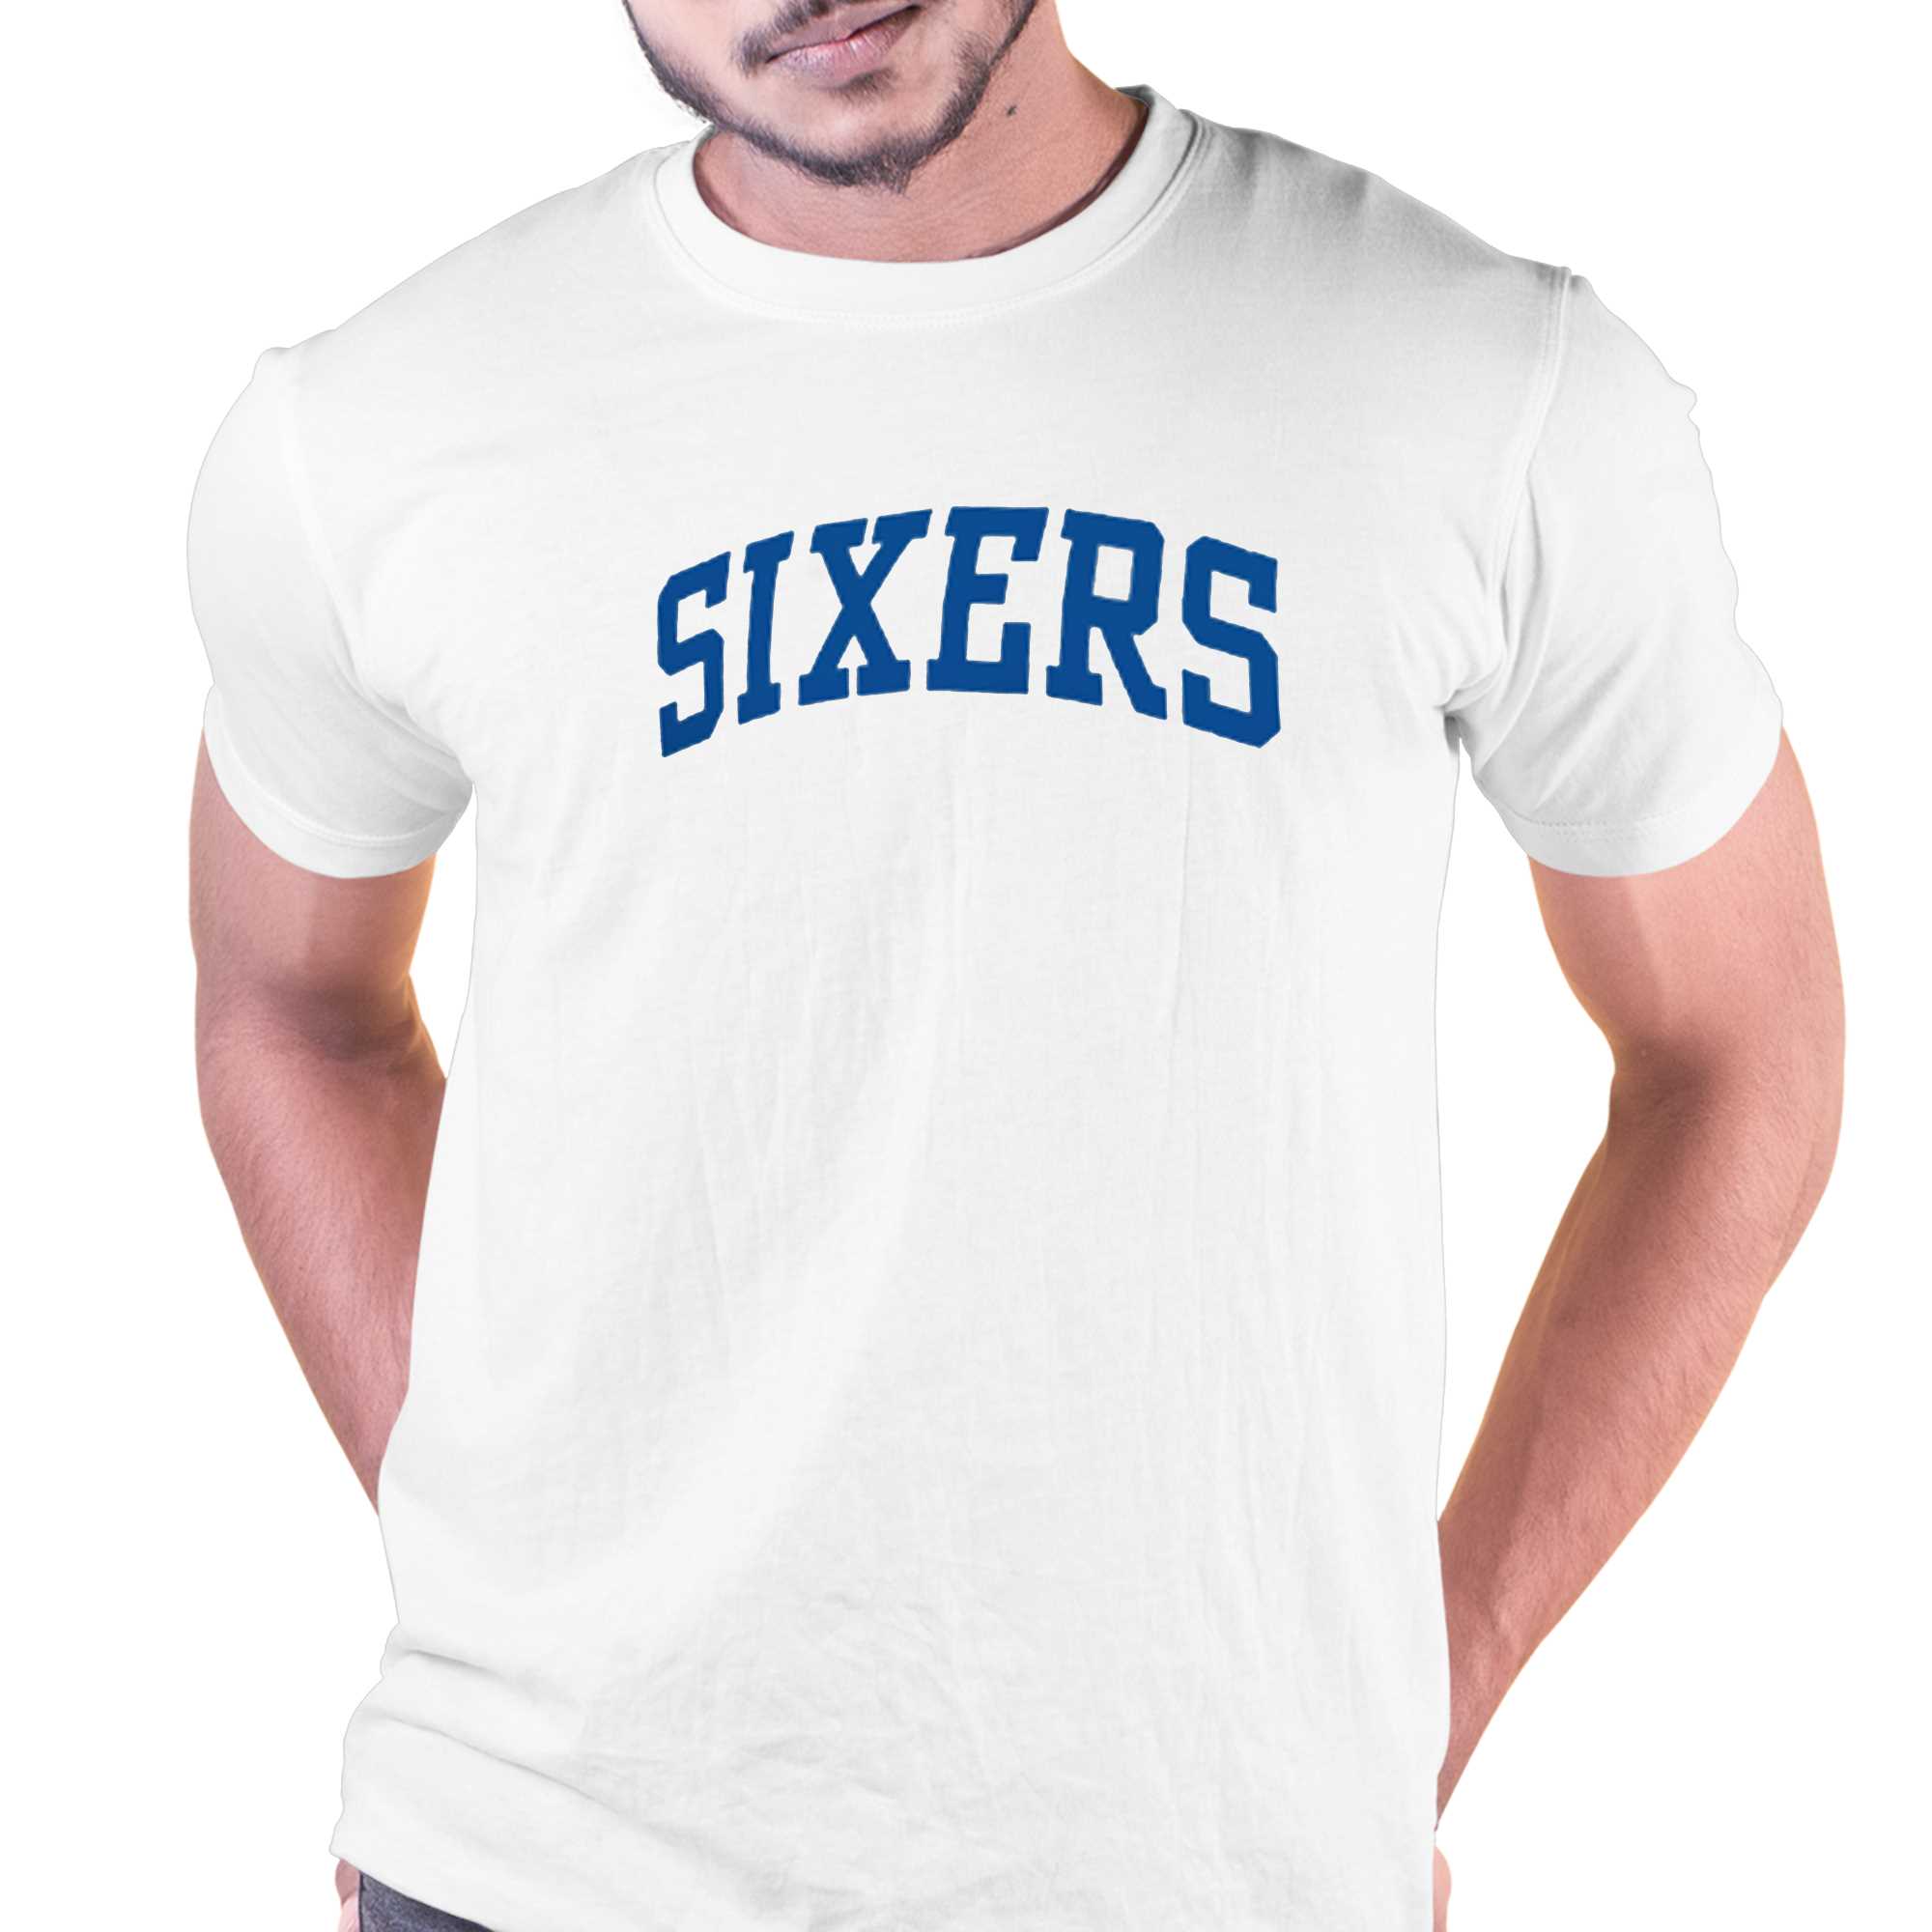 Philadelphia 76ers Fanatics Branded Wordmark Ii Pullover Sweatshirt